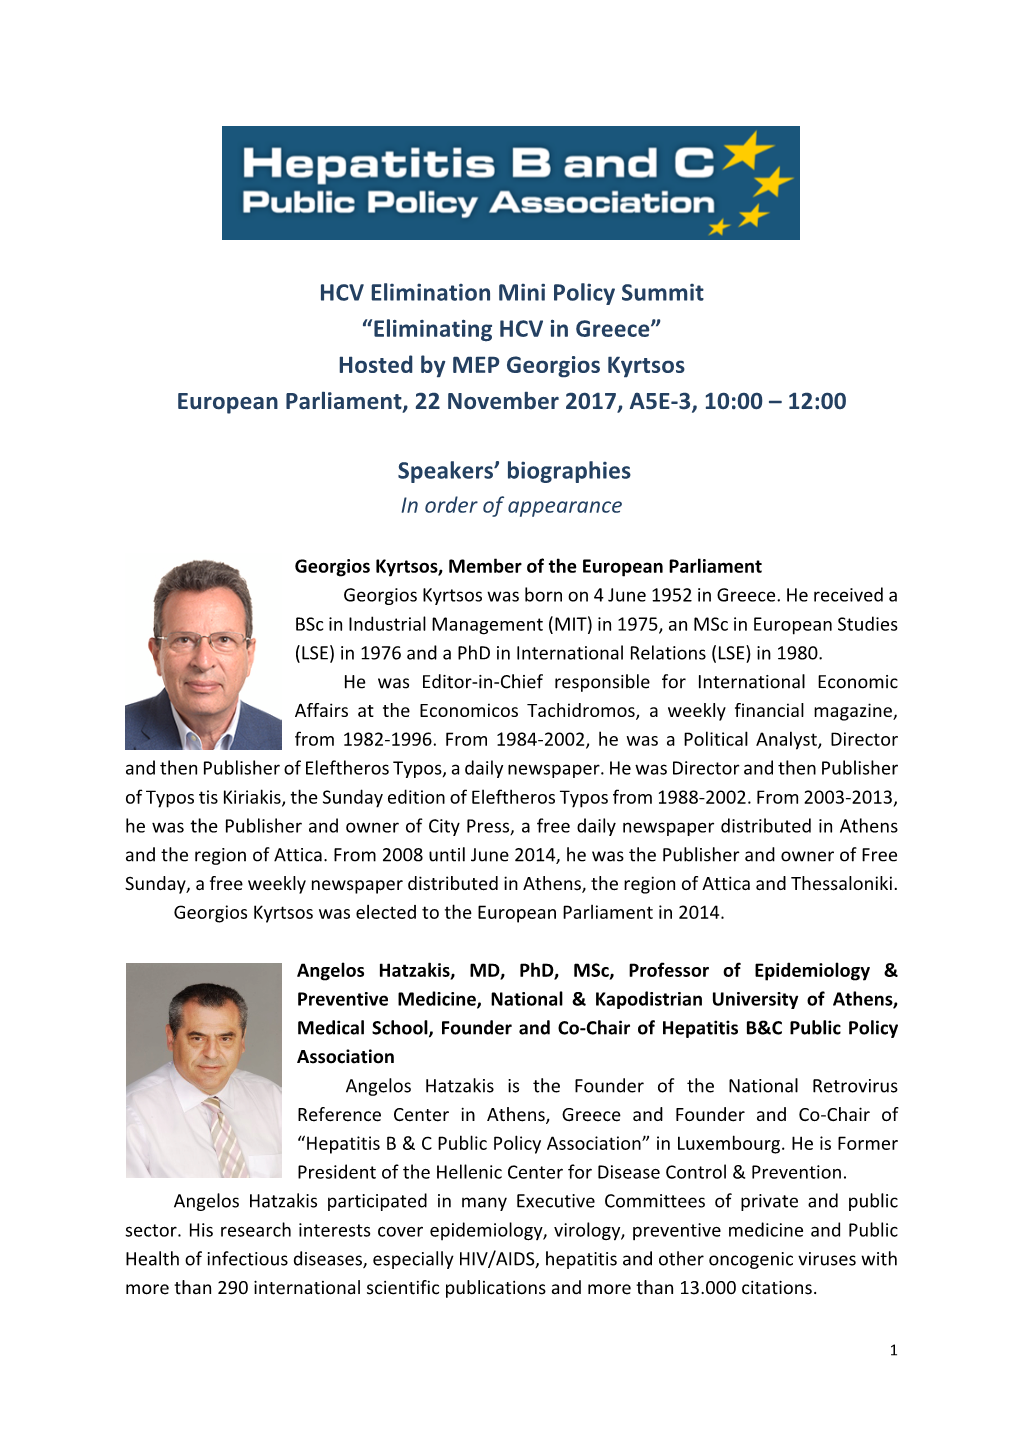 HCV Elimination Mini Policy Summit Greece Speakers Biographies 2017